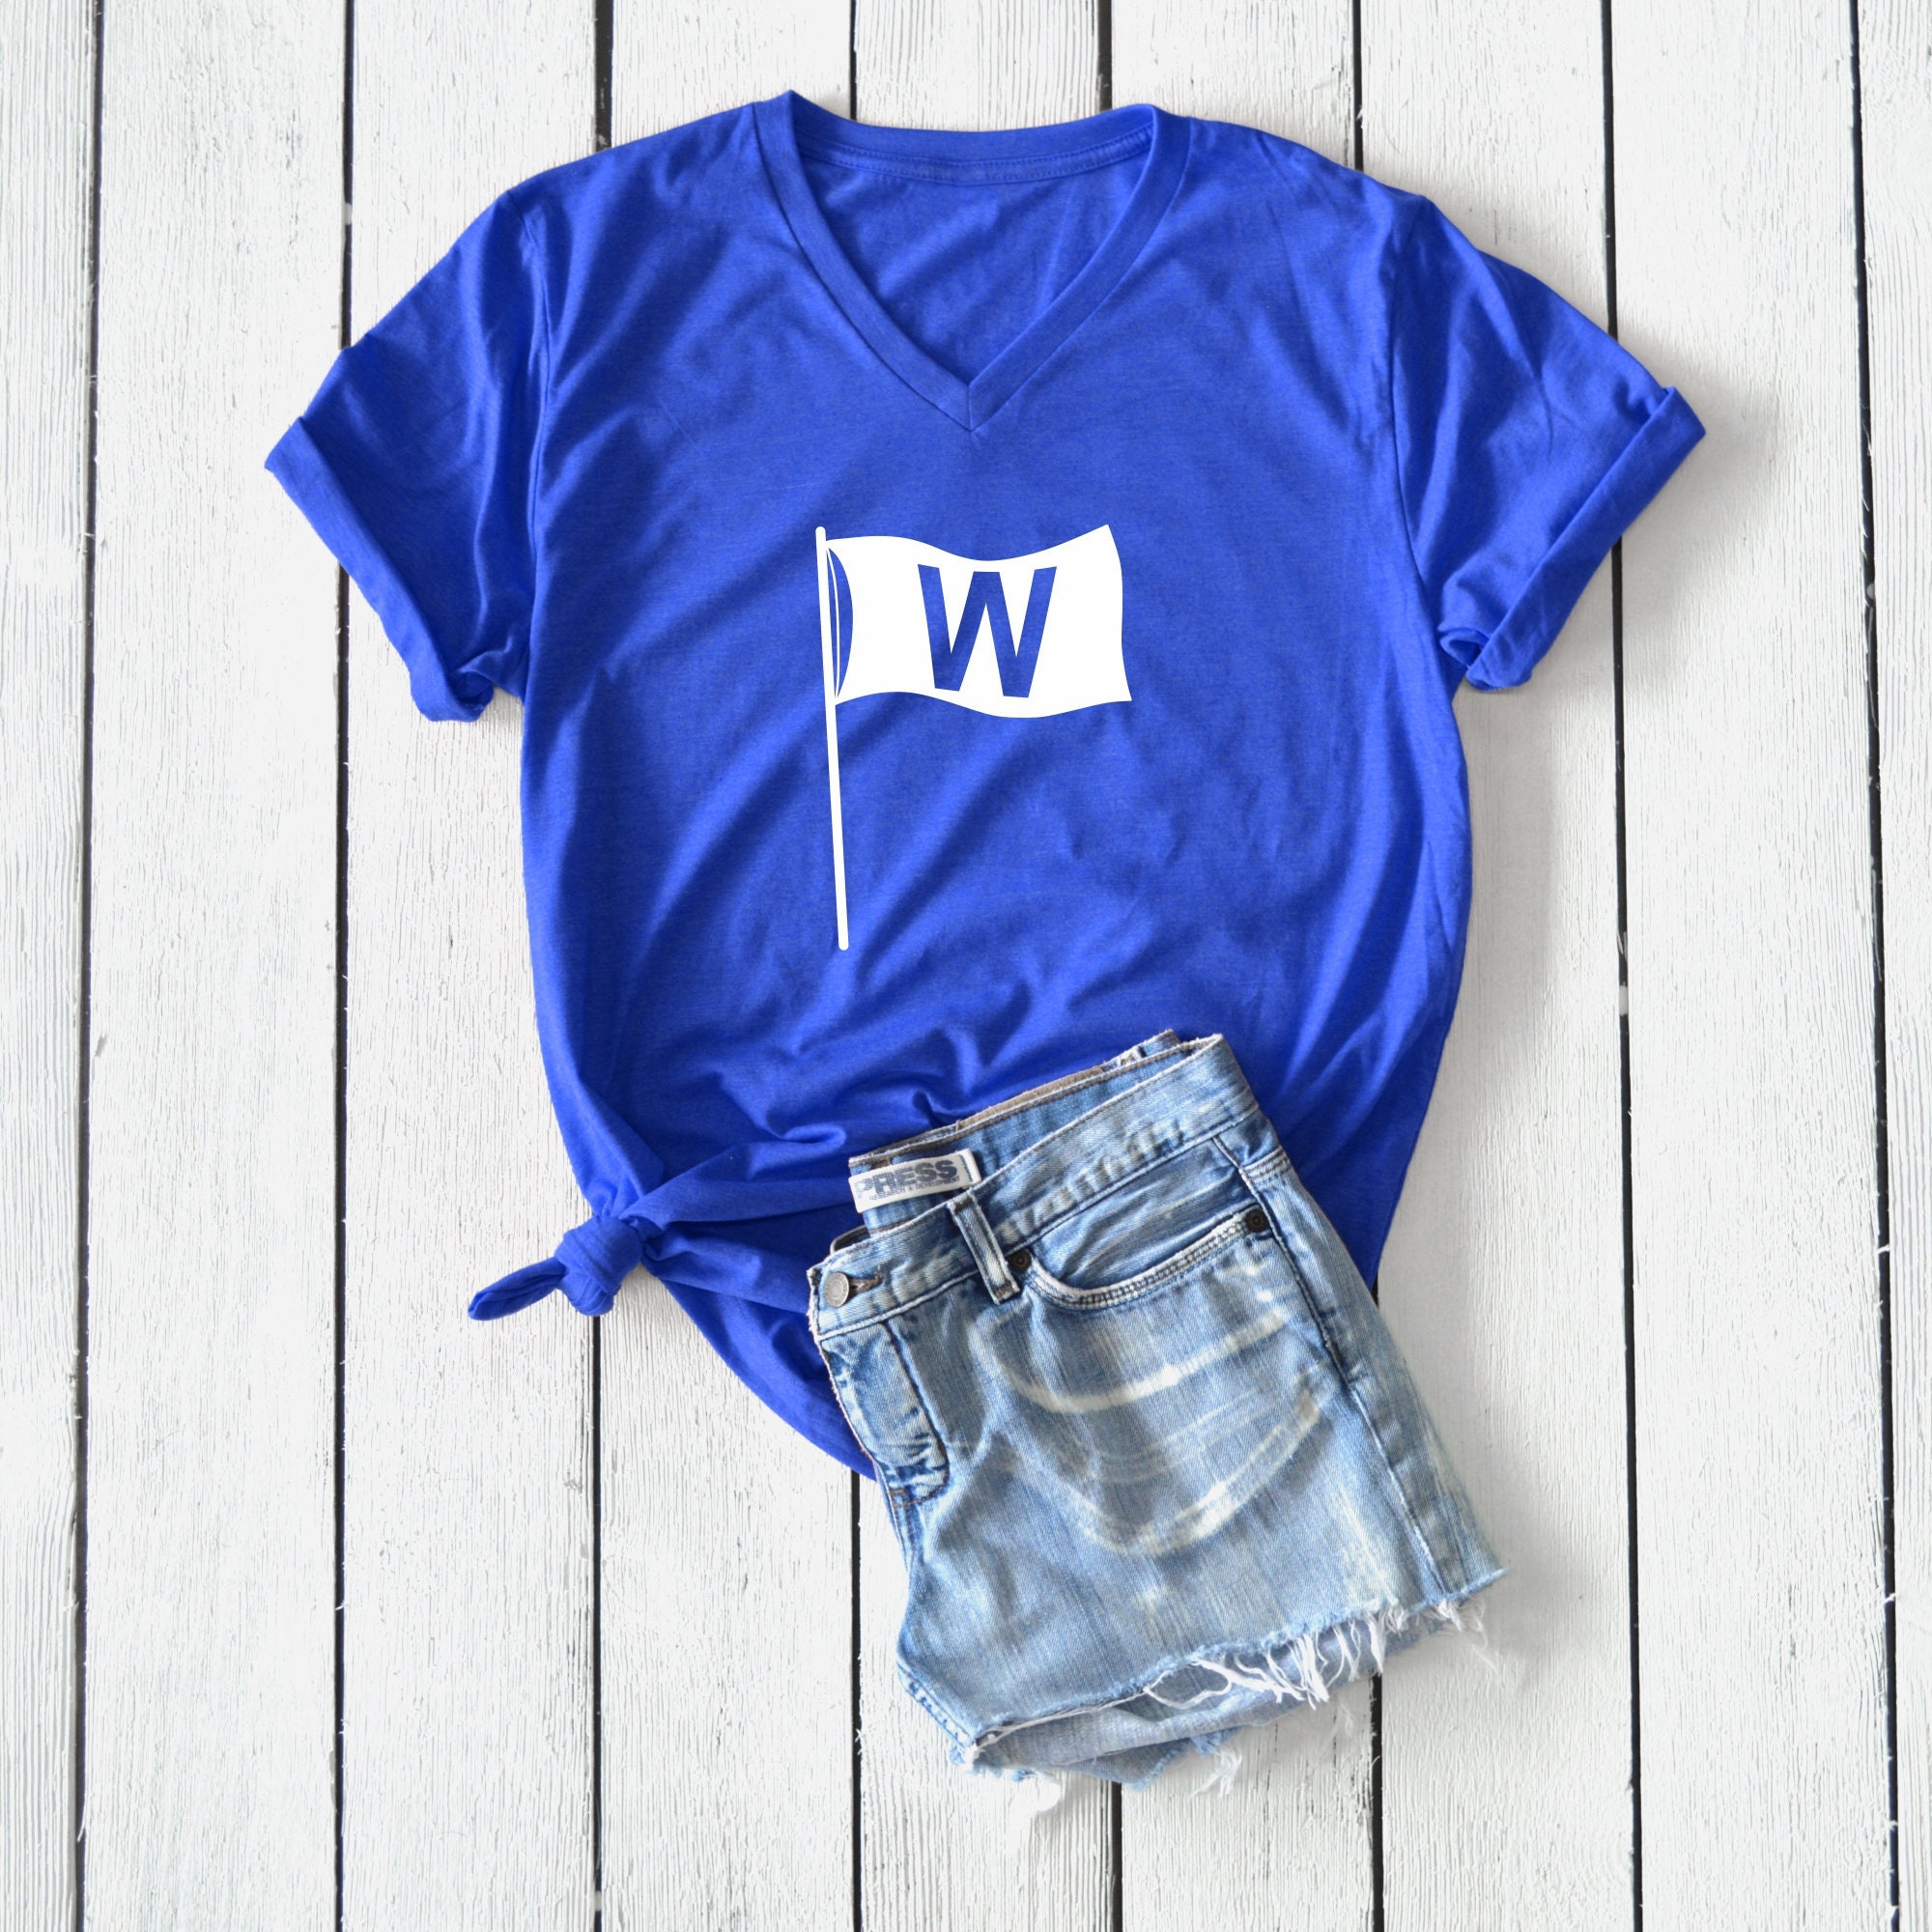 MLB Chicago Cubs Toddler Boys' 2pk T-Shirt - 2T